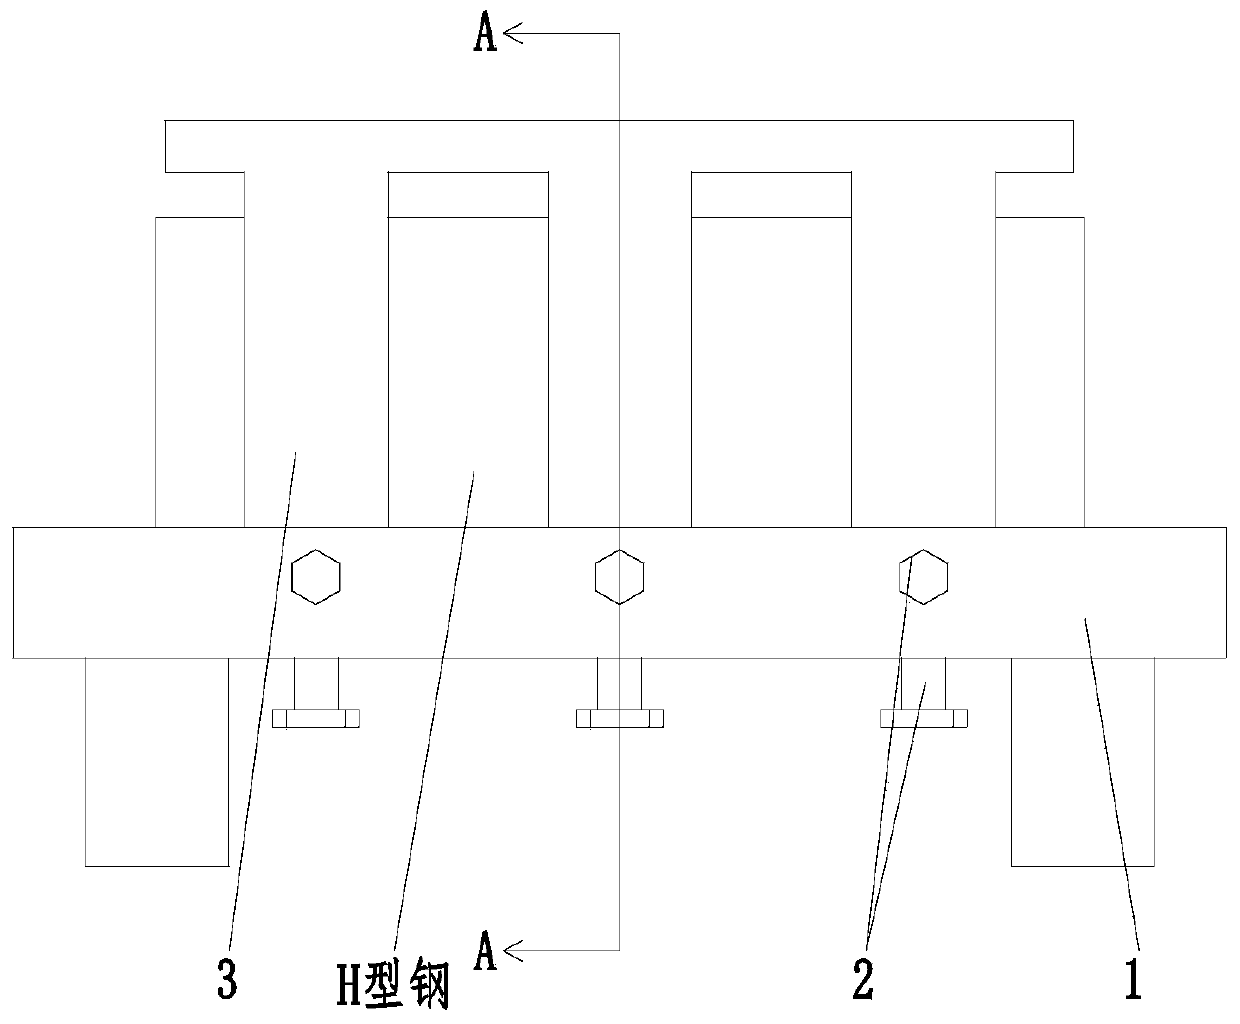 H-shaped steel manufacturing method